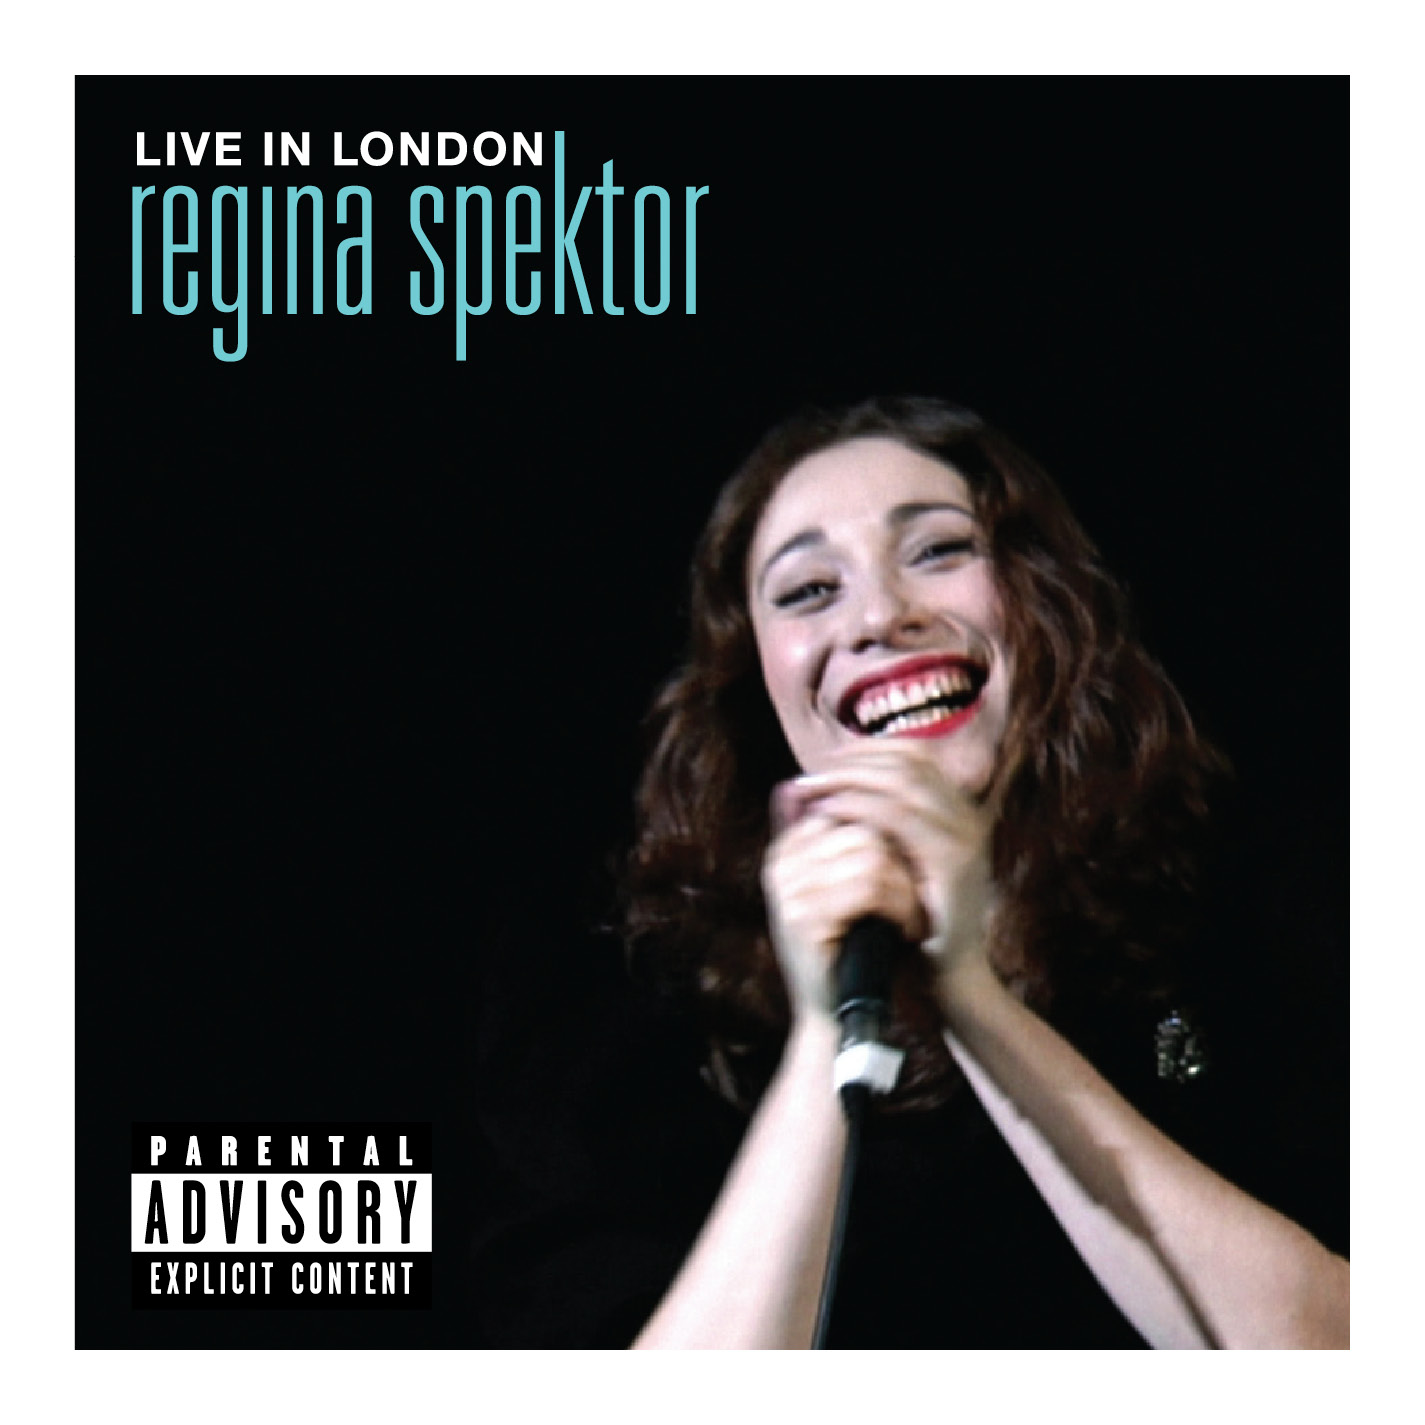 Regina Spektor’s Live In London Coming To DVD